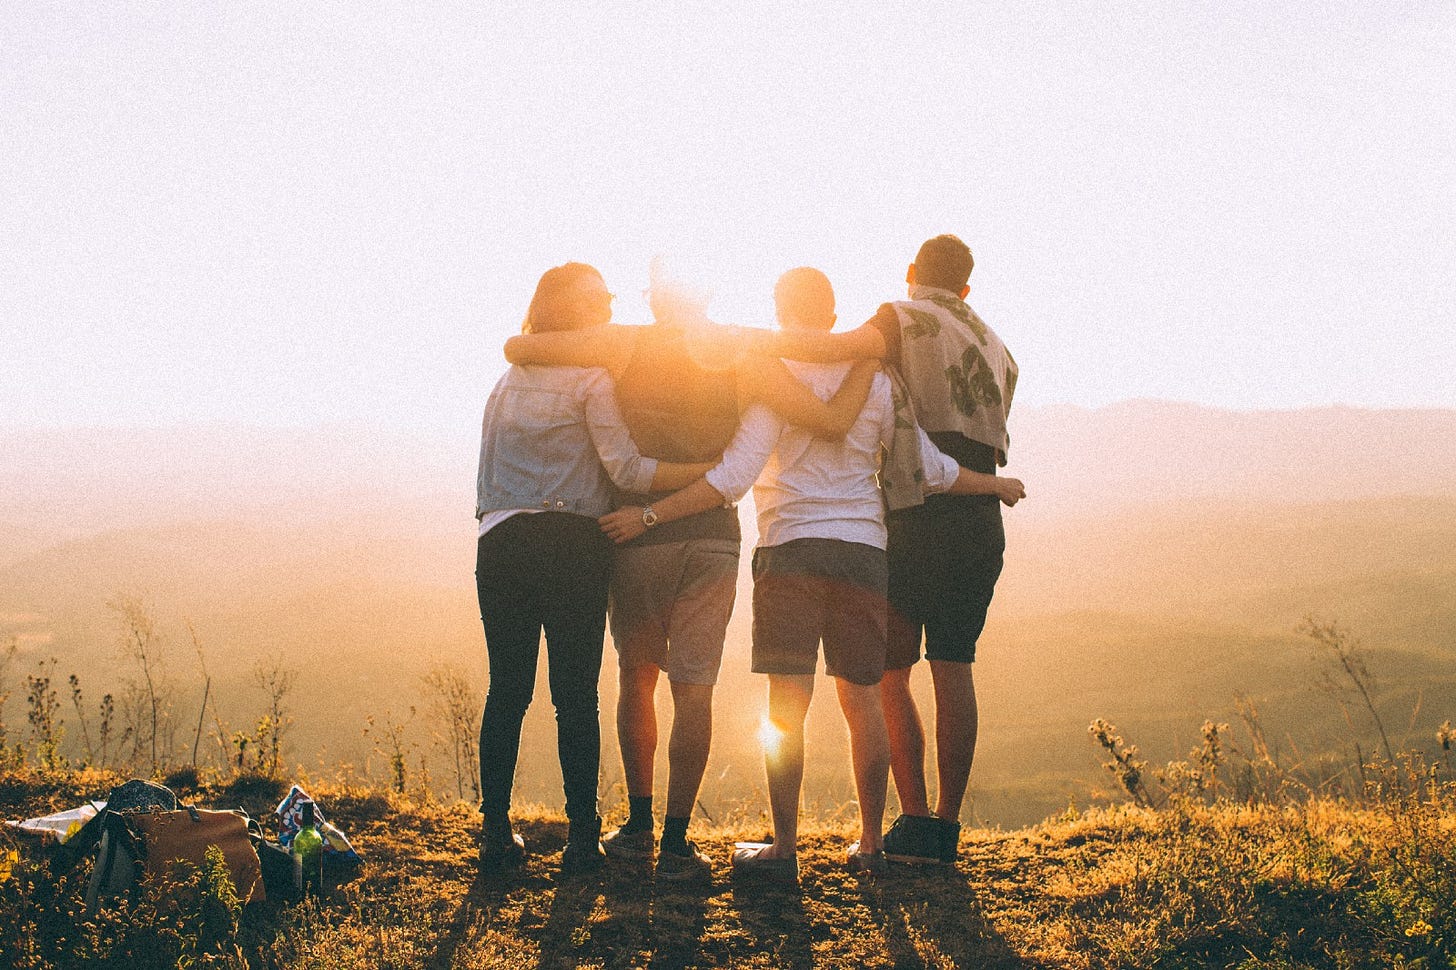 Four friends embrace on a mountaintop as the sun rises